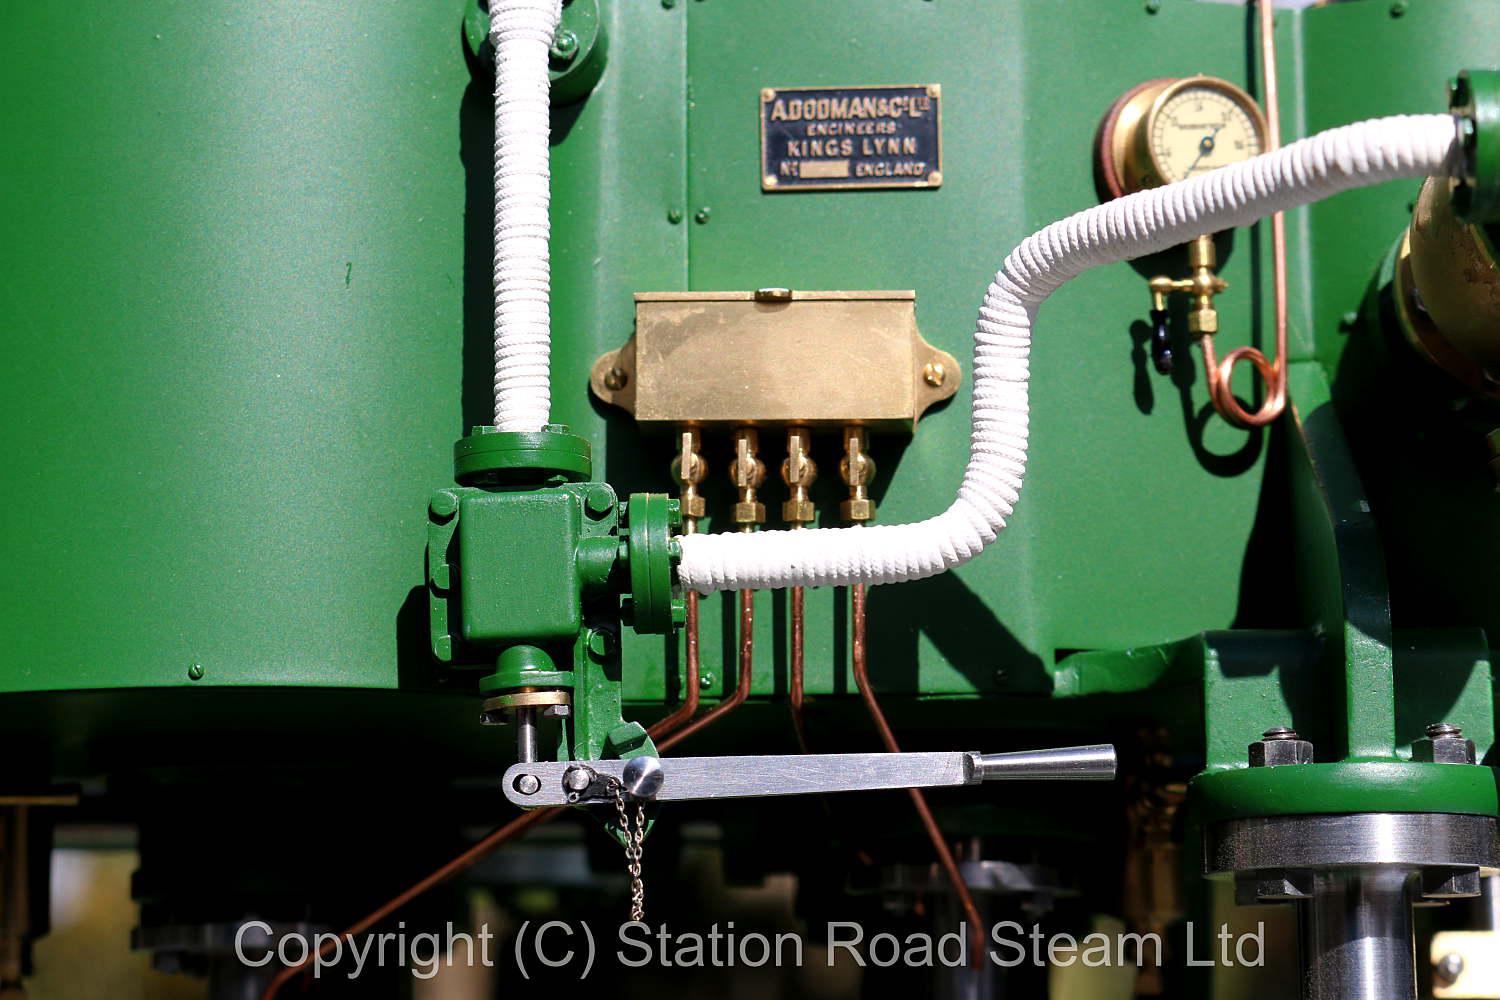 1 1/2 inch scale Alfred Dodman compound marine engine